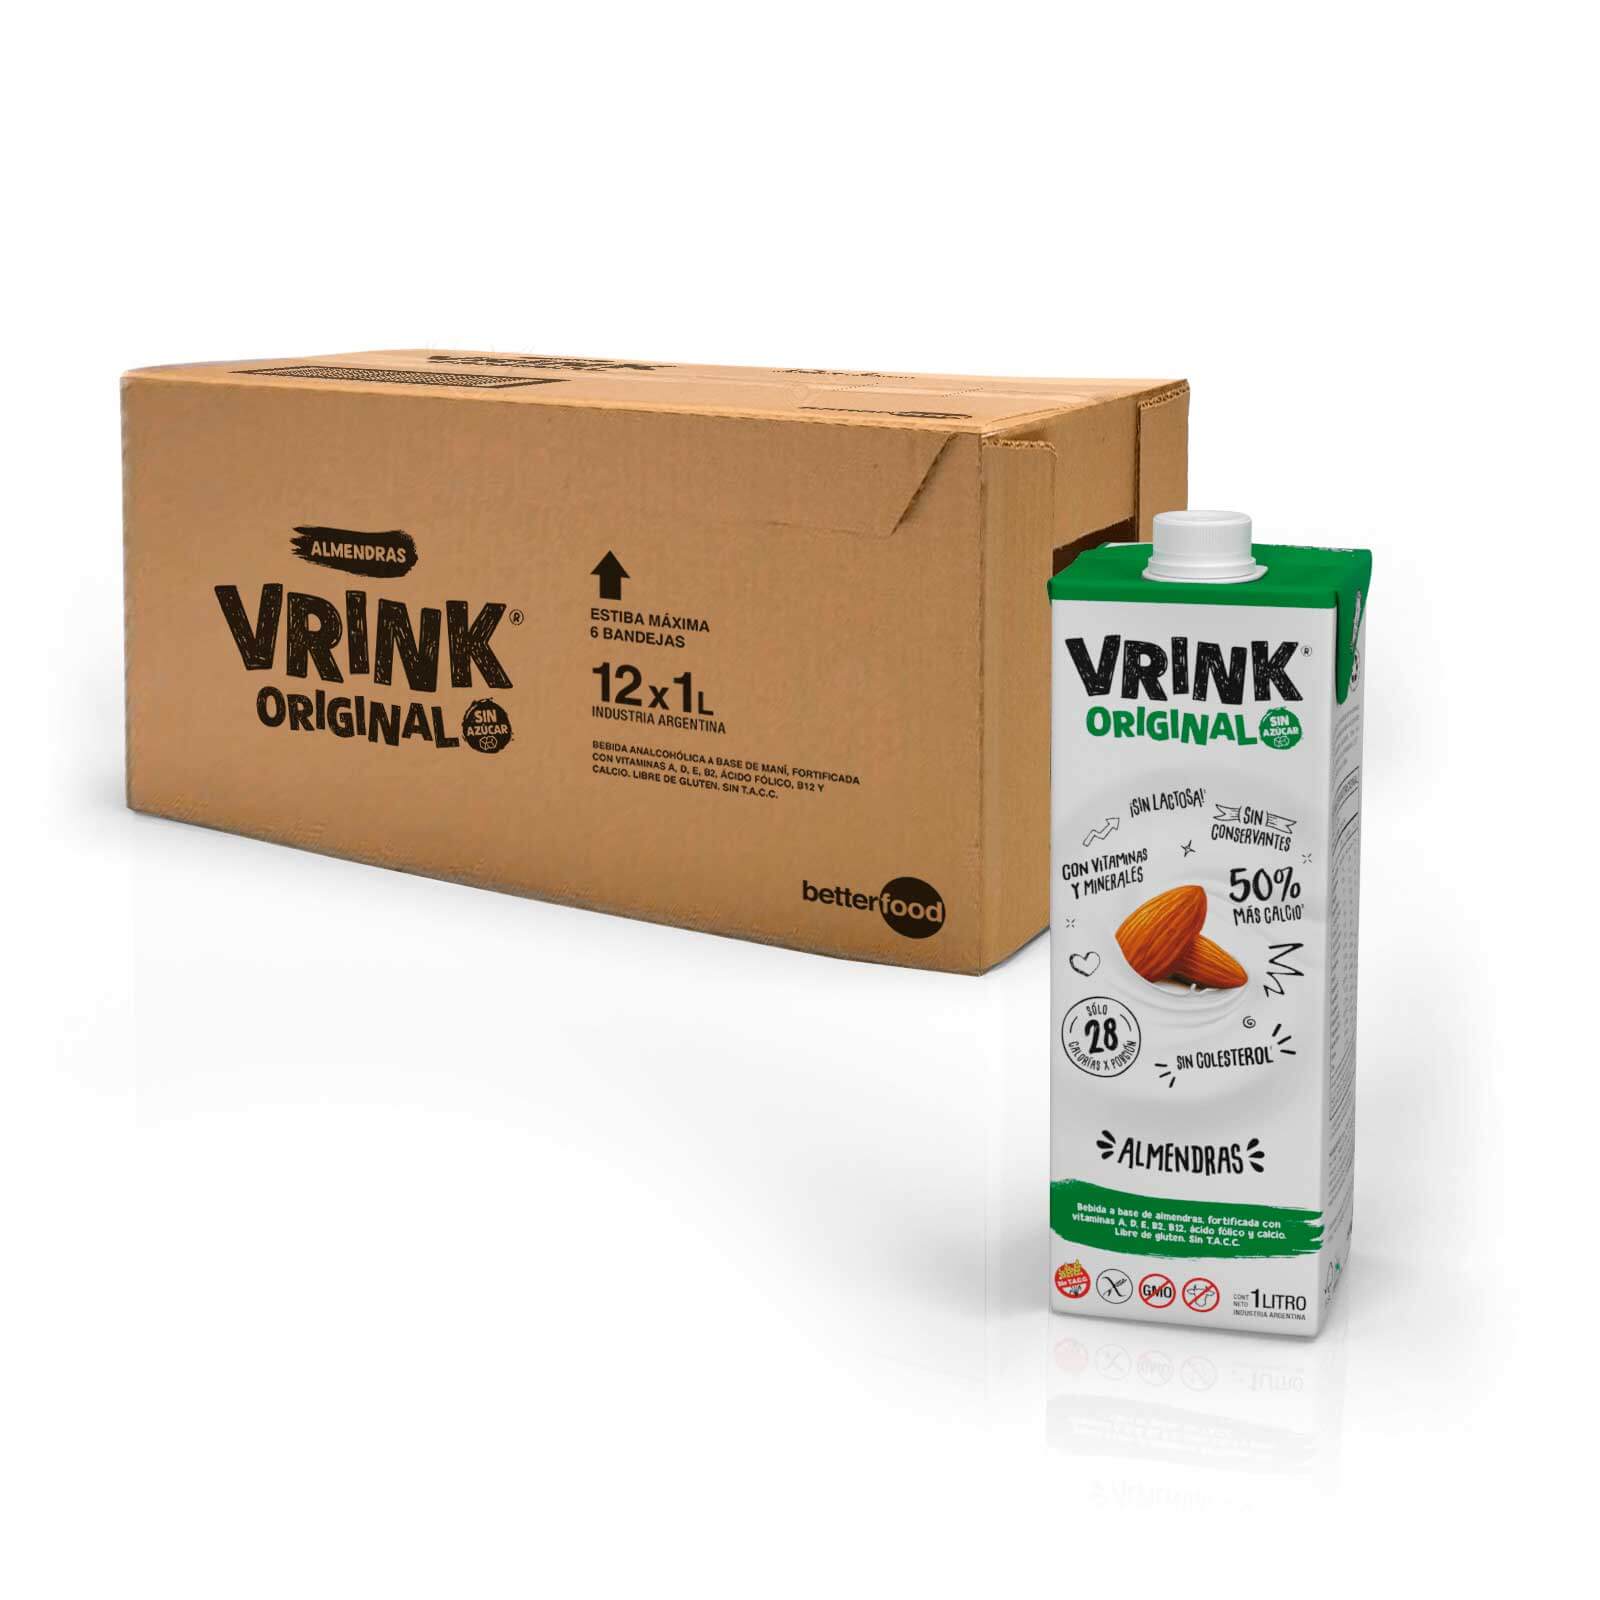 Caja Vrink Original de almendras sin azúcar